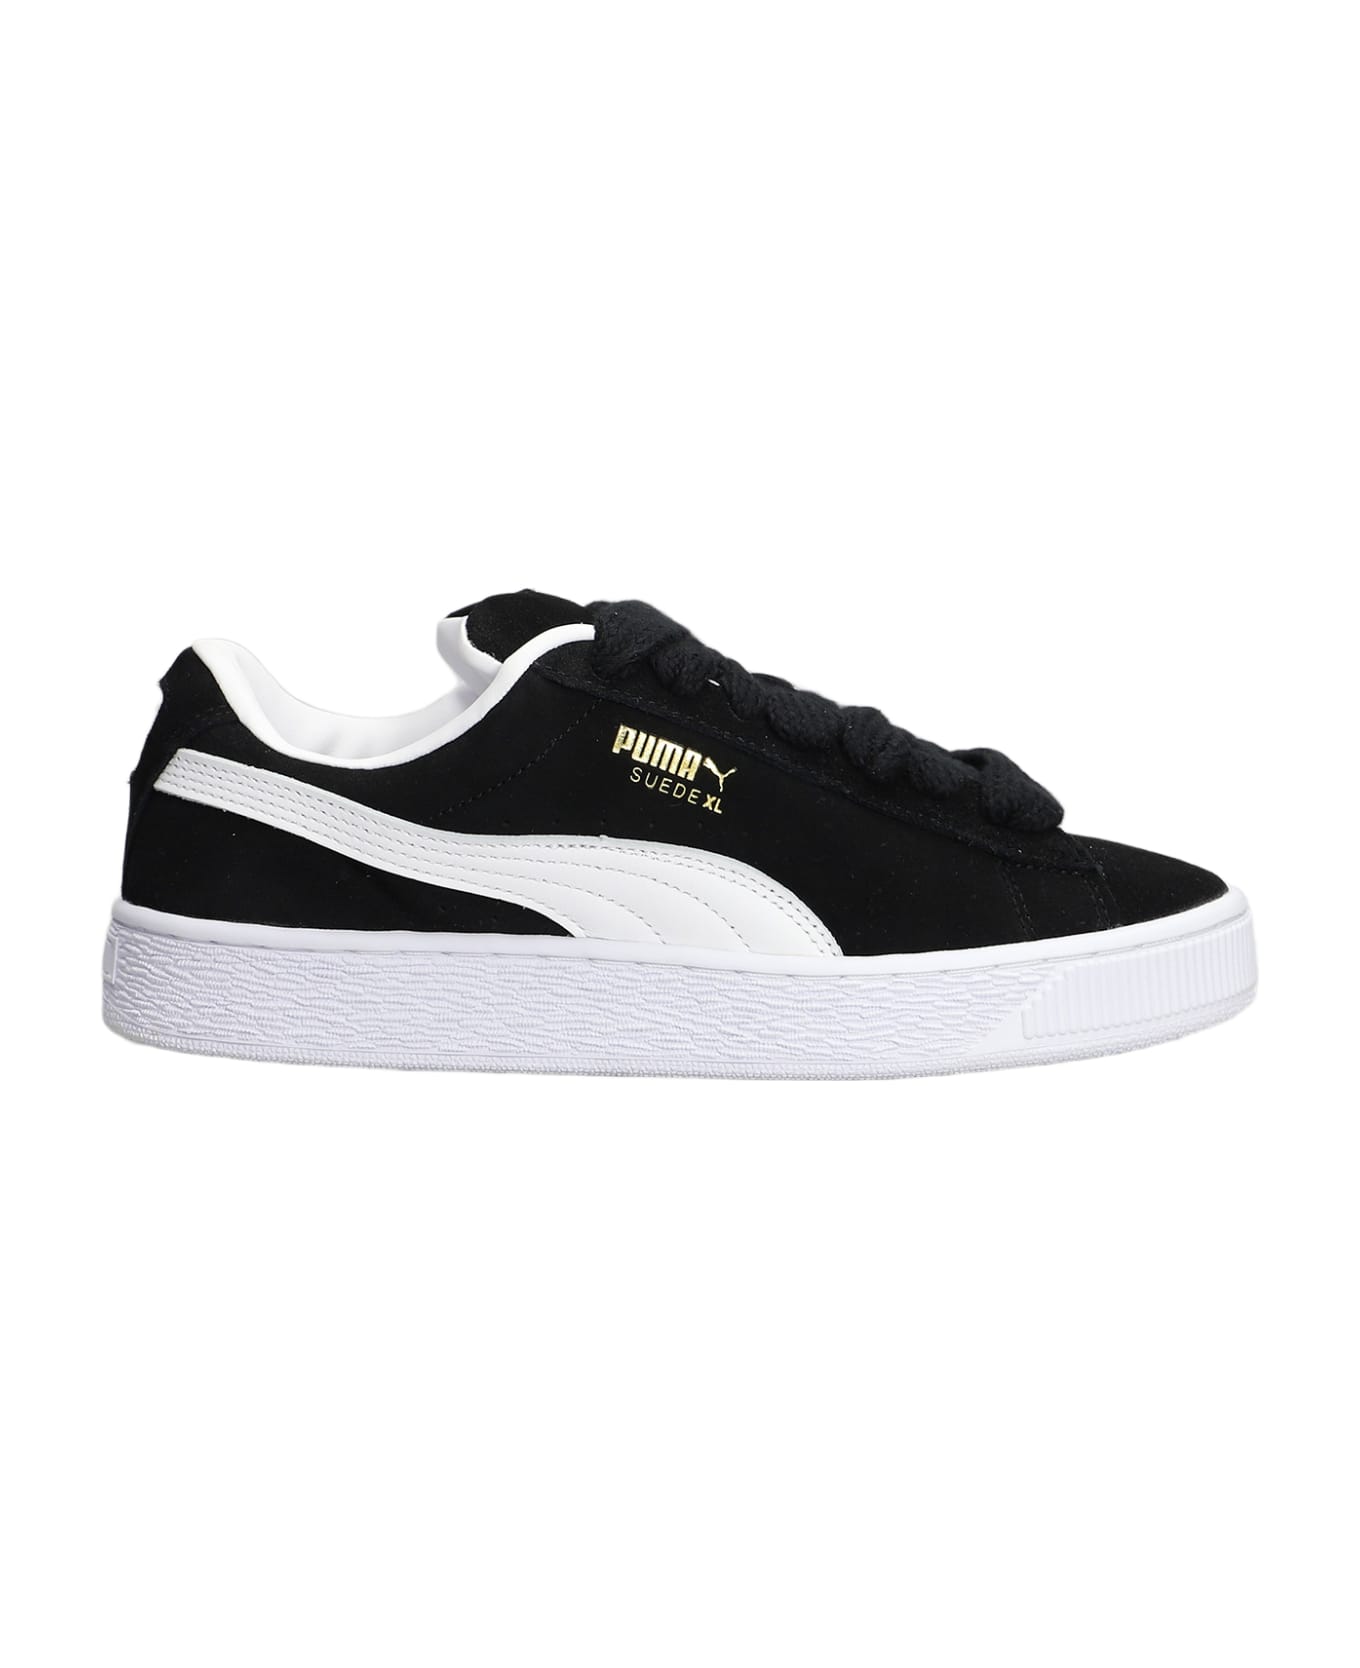 Puma Suede Xl Sneakers In Black Suede - Black